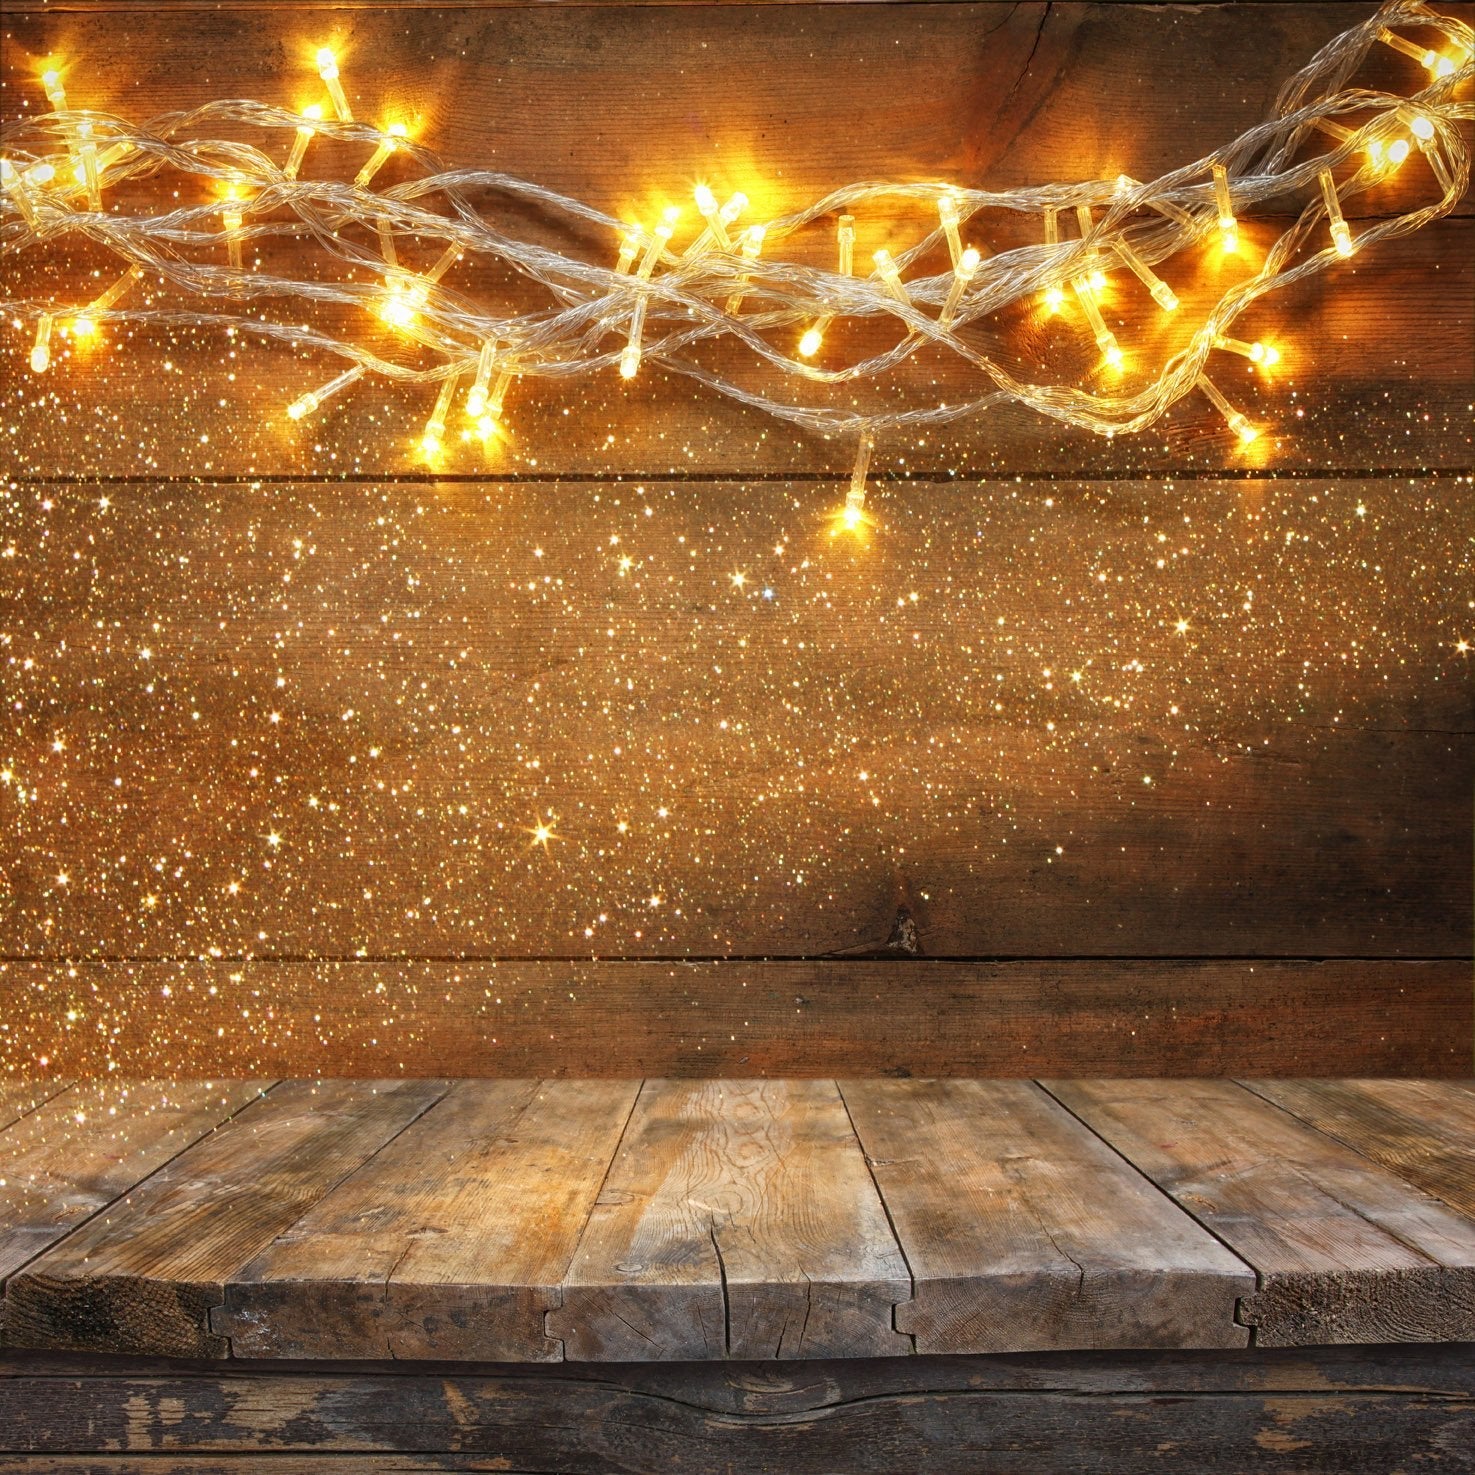 Katebackdrop：Kate wood backdrop for Christmas Photography with lights